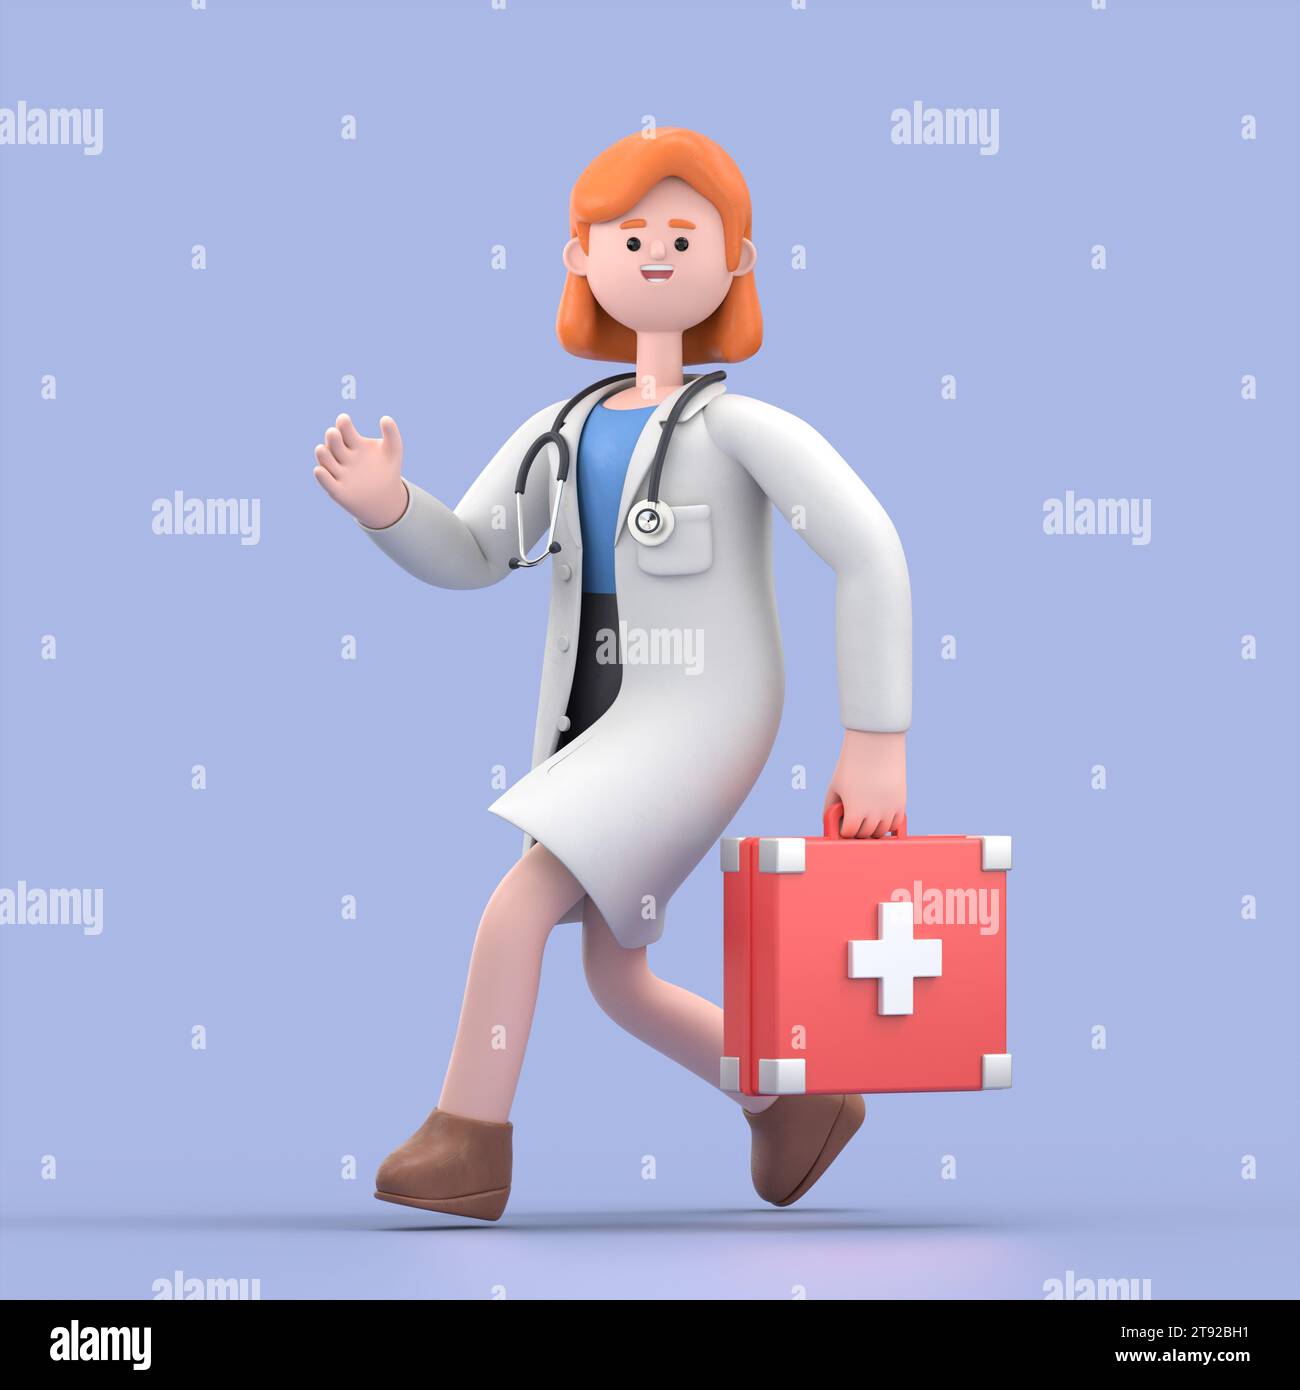 3D illustration of Female Doctor Nova runs.Medical presentation clip art isolated on blue background. Stock Photo